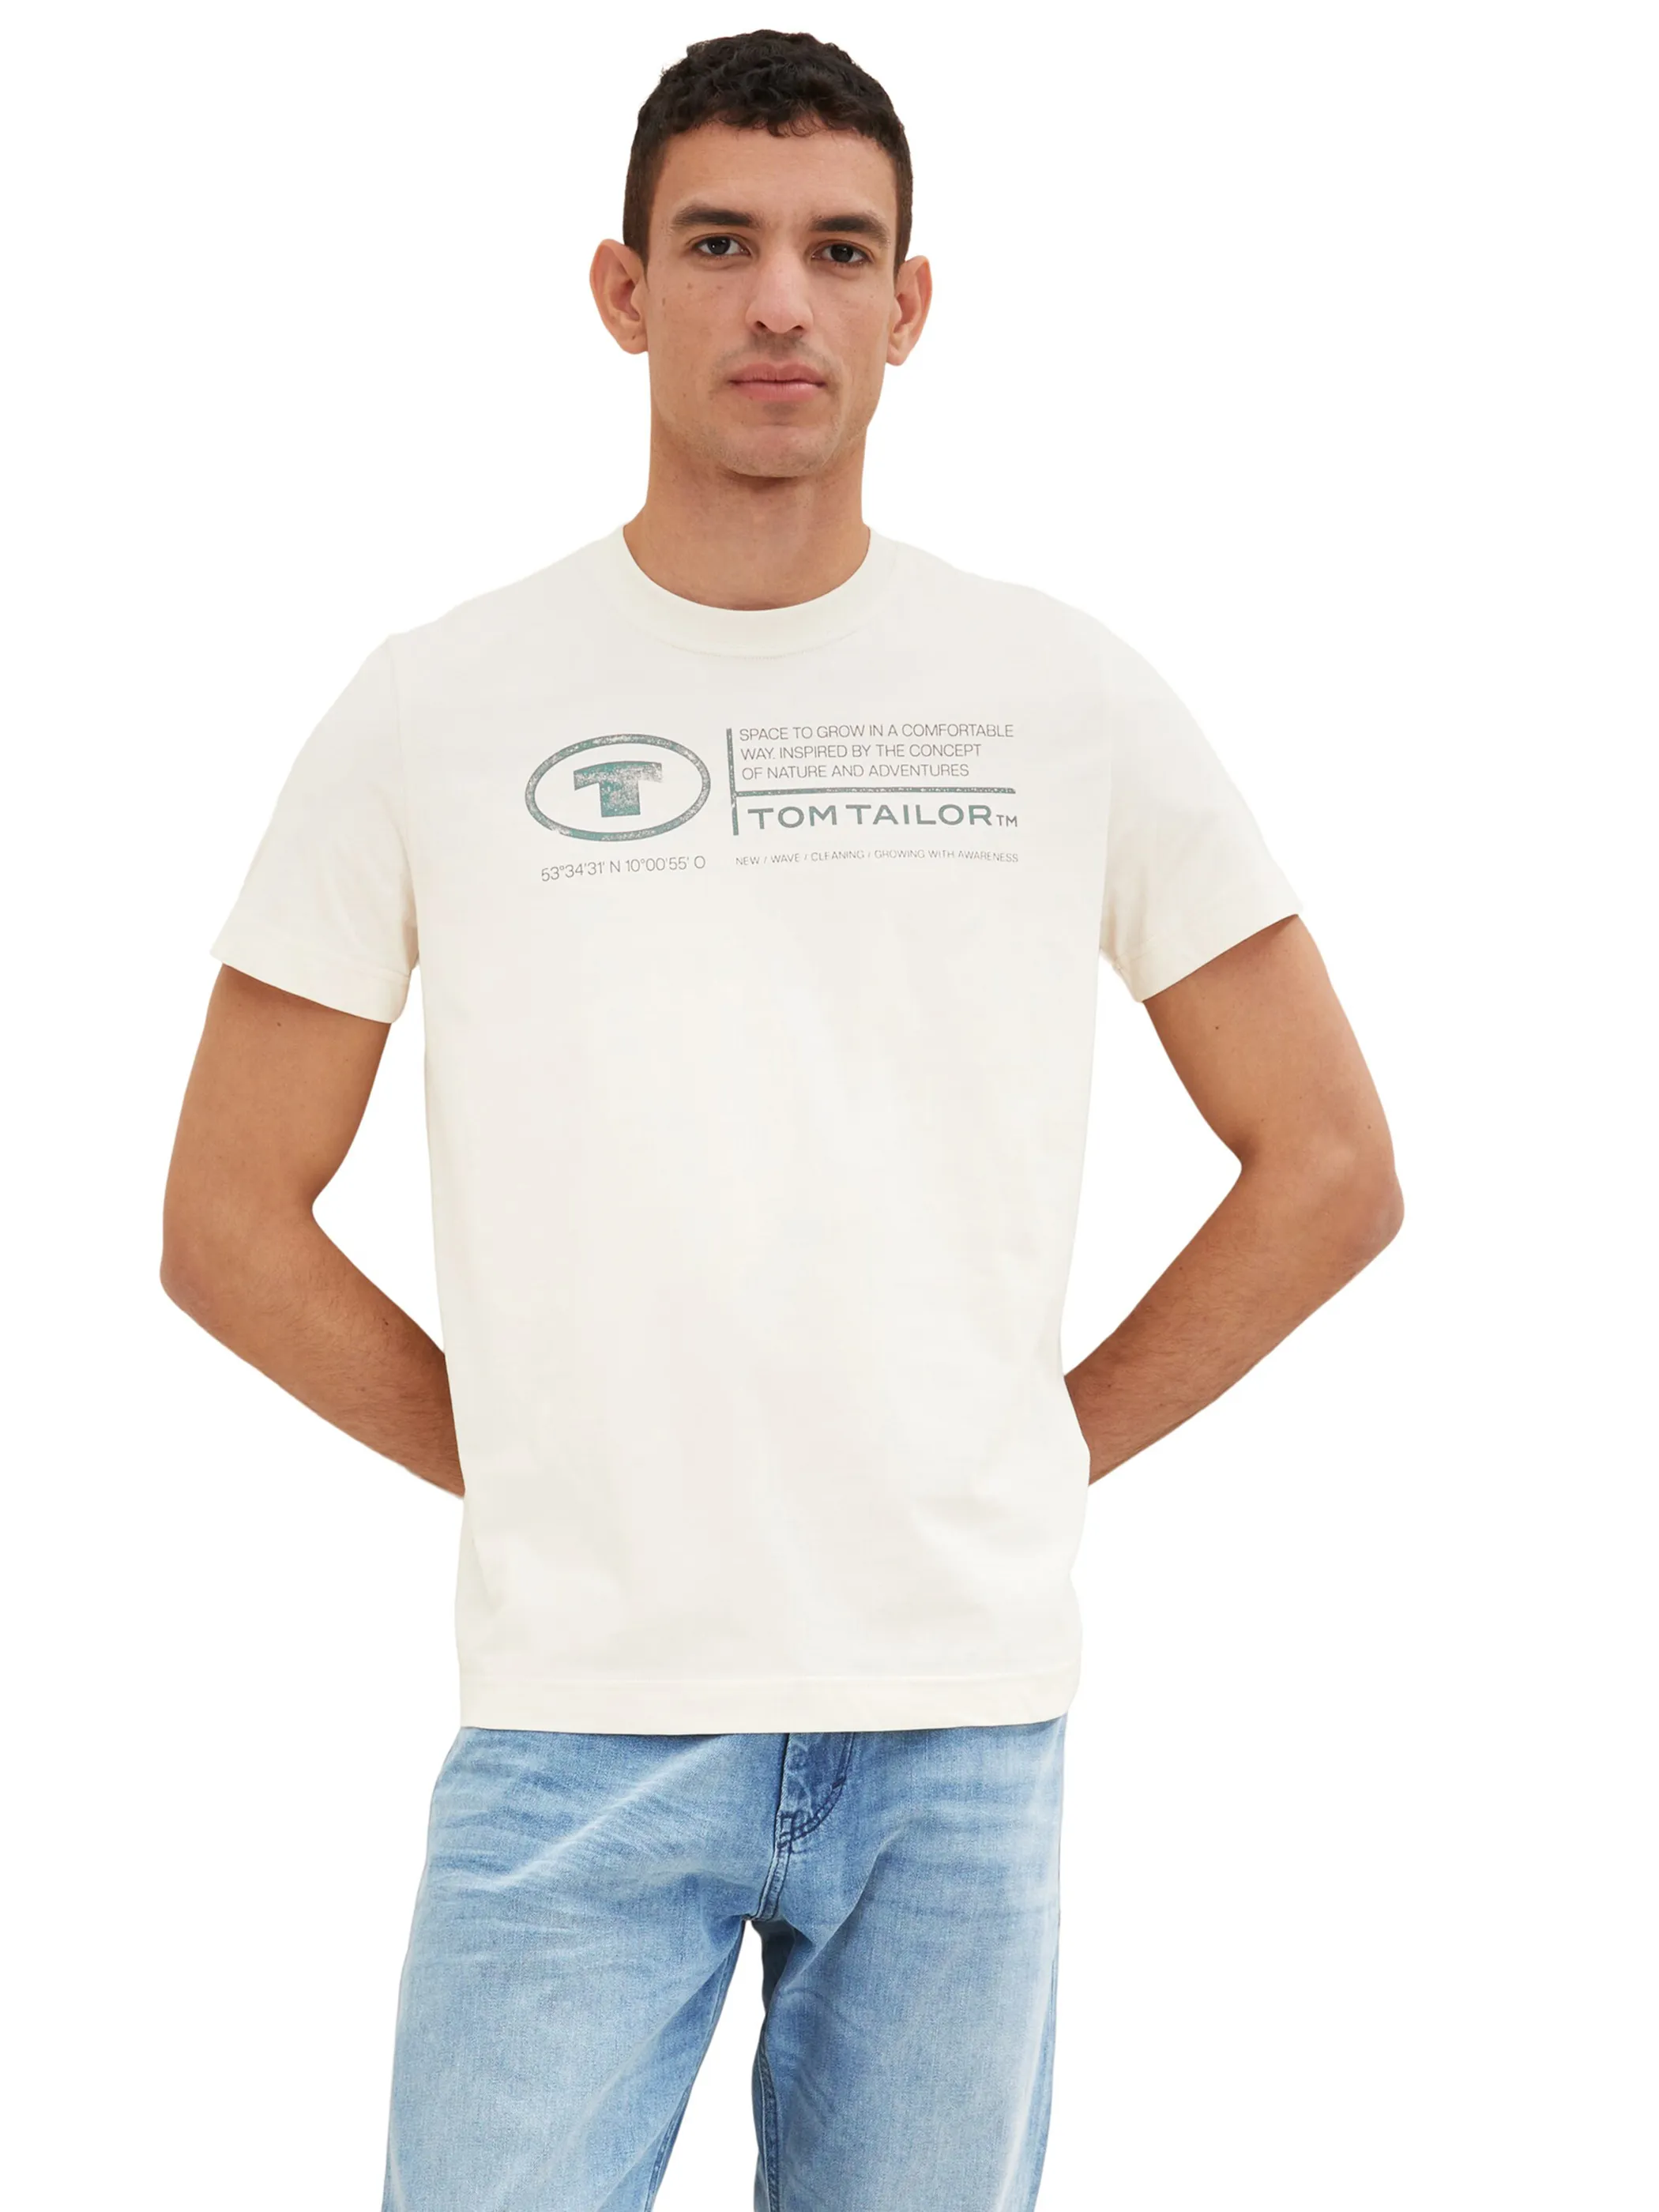 Tom Tailor 1035611 NOS printed crewneck t-shirt Weiß 874939 18592 3